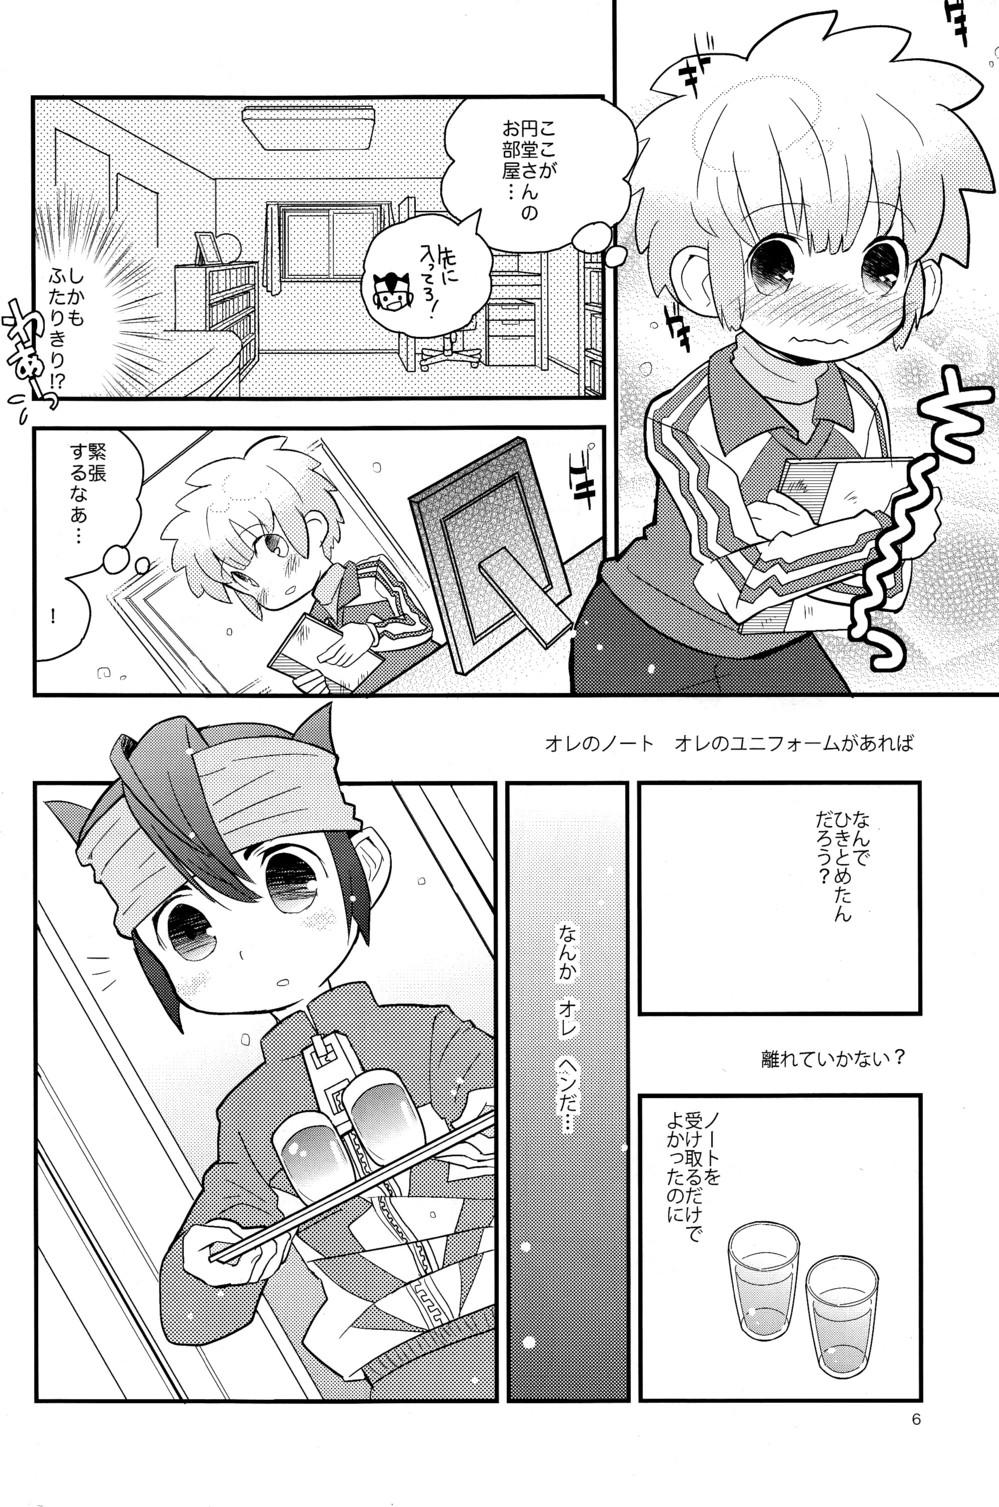 Ano 1 + 1 = Mugen Lovers!! - Inazuma eleven Sperm - Page 6